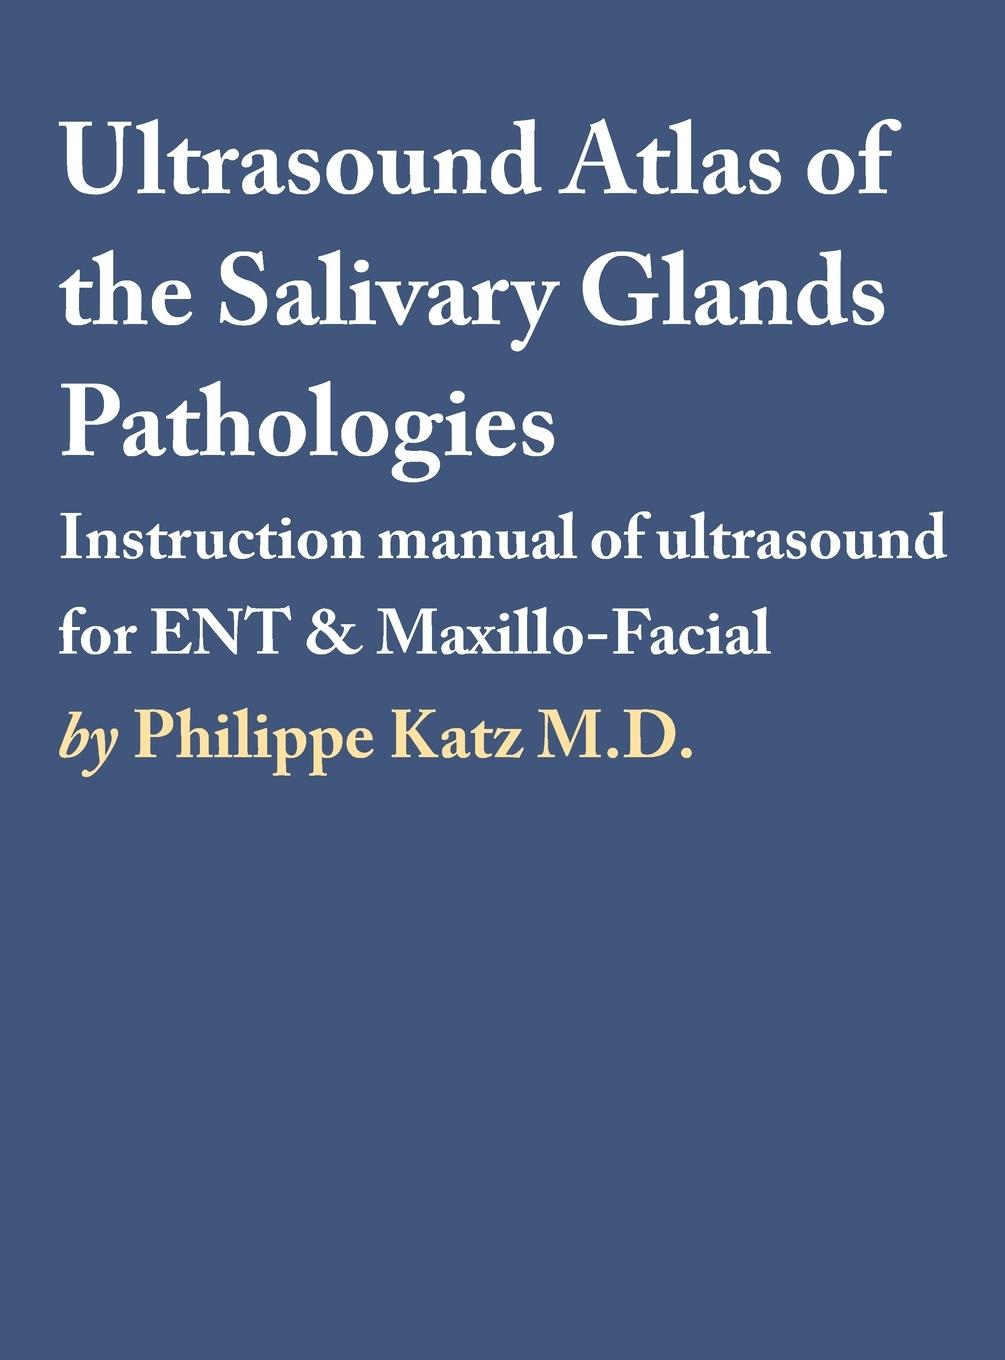 Book Ultrasound Atlas of the Salivary Glands Pathologies 